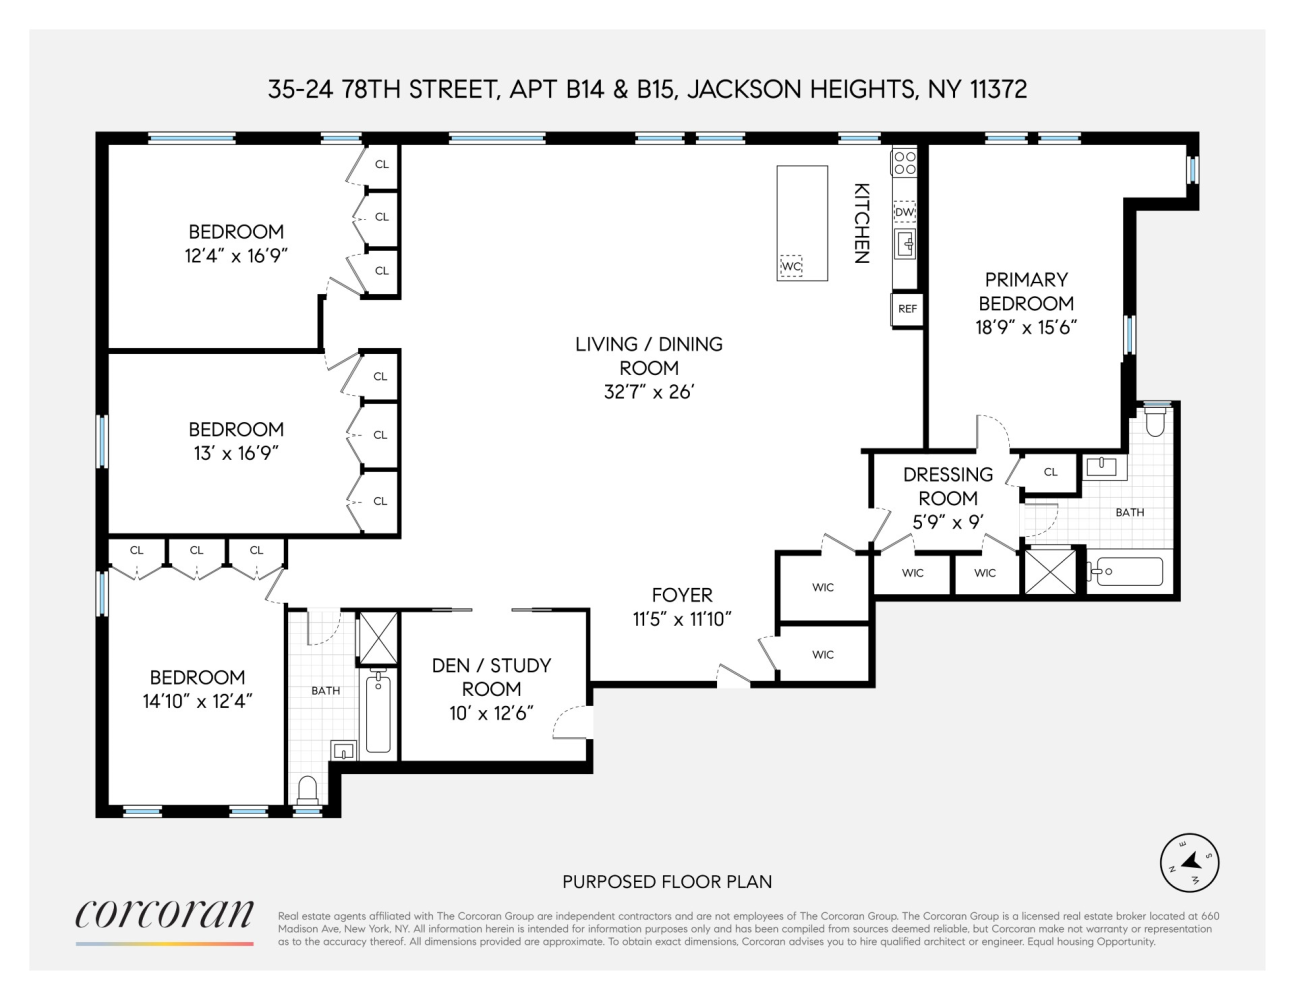 Floorplan for 35-24 78th Street